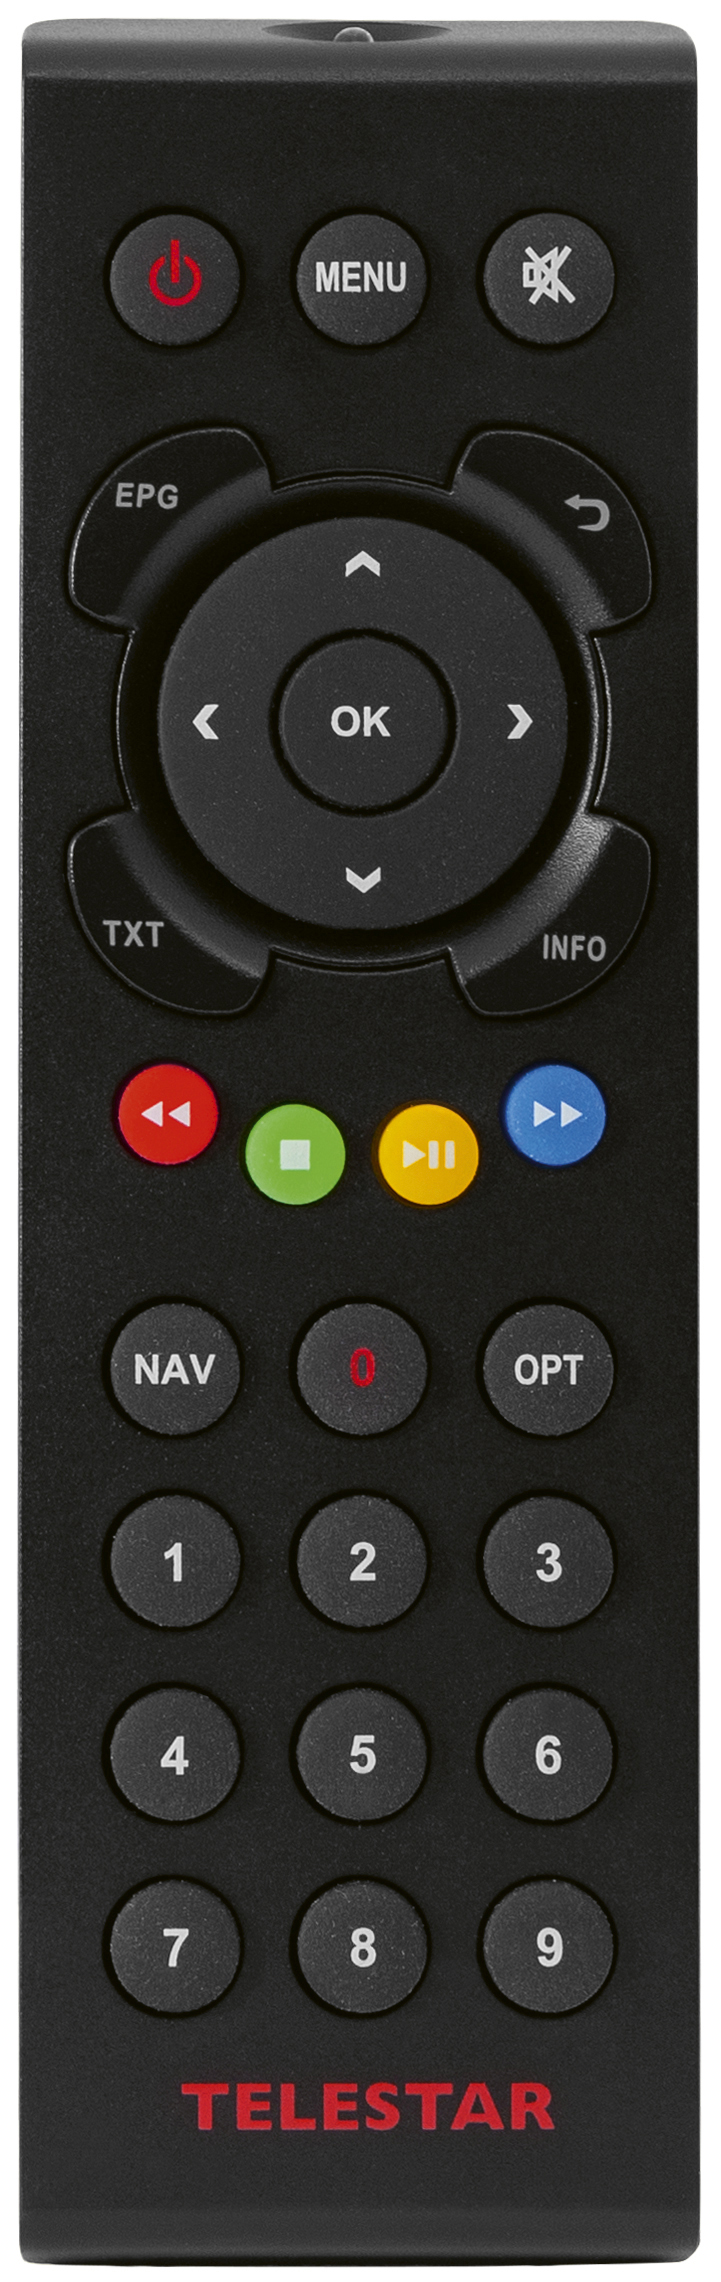 Schwarz) PVR-Funktion, DVB-S2, TS 12 DVB-S, DigiHD (HDTV, TELESTAR Receiver